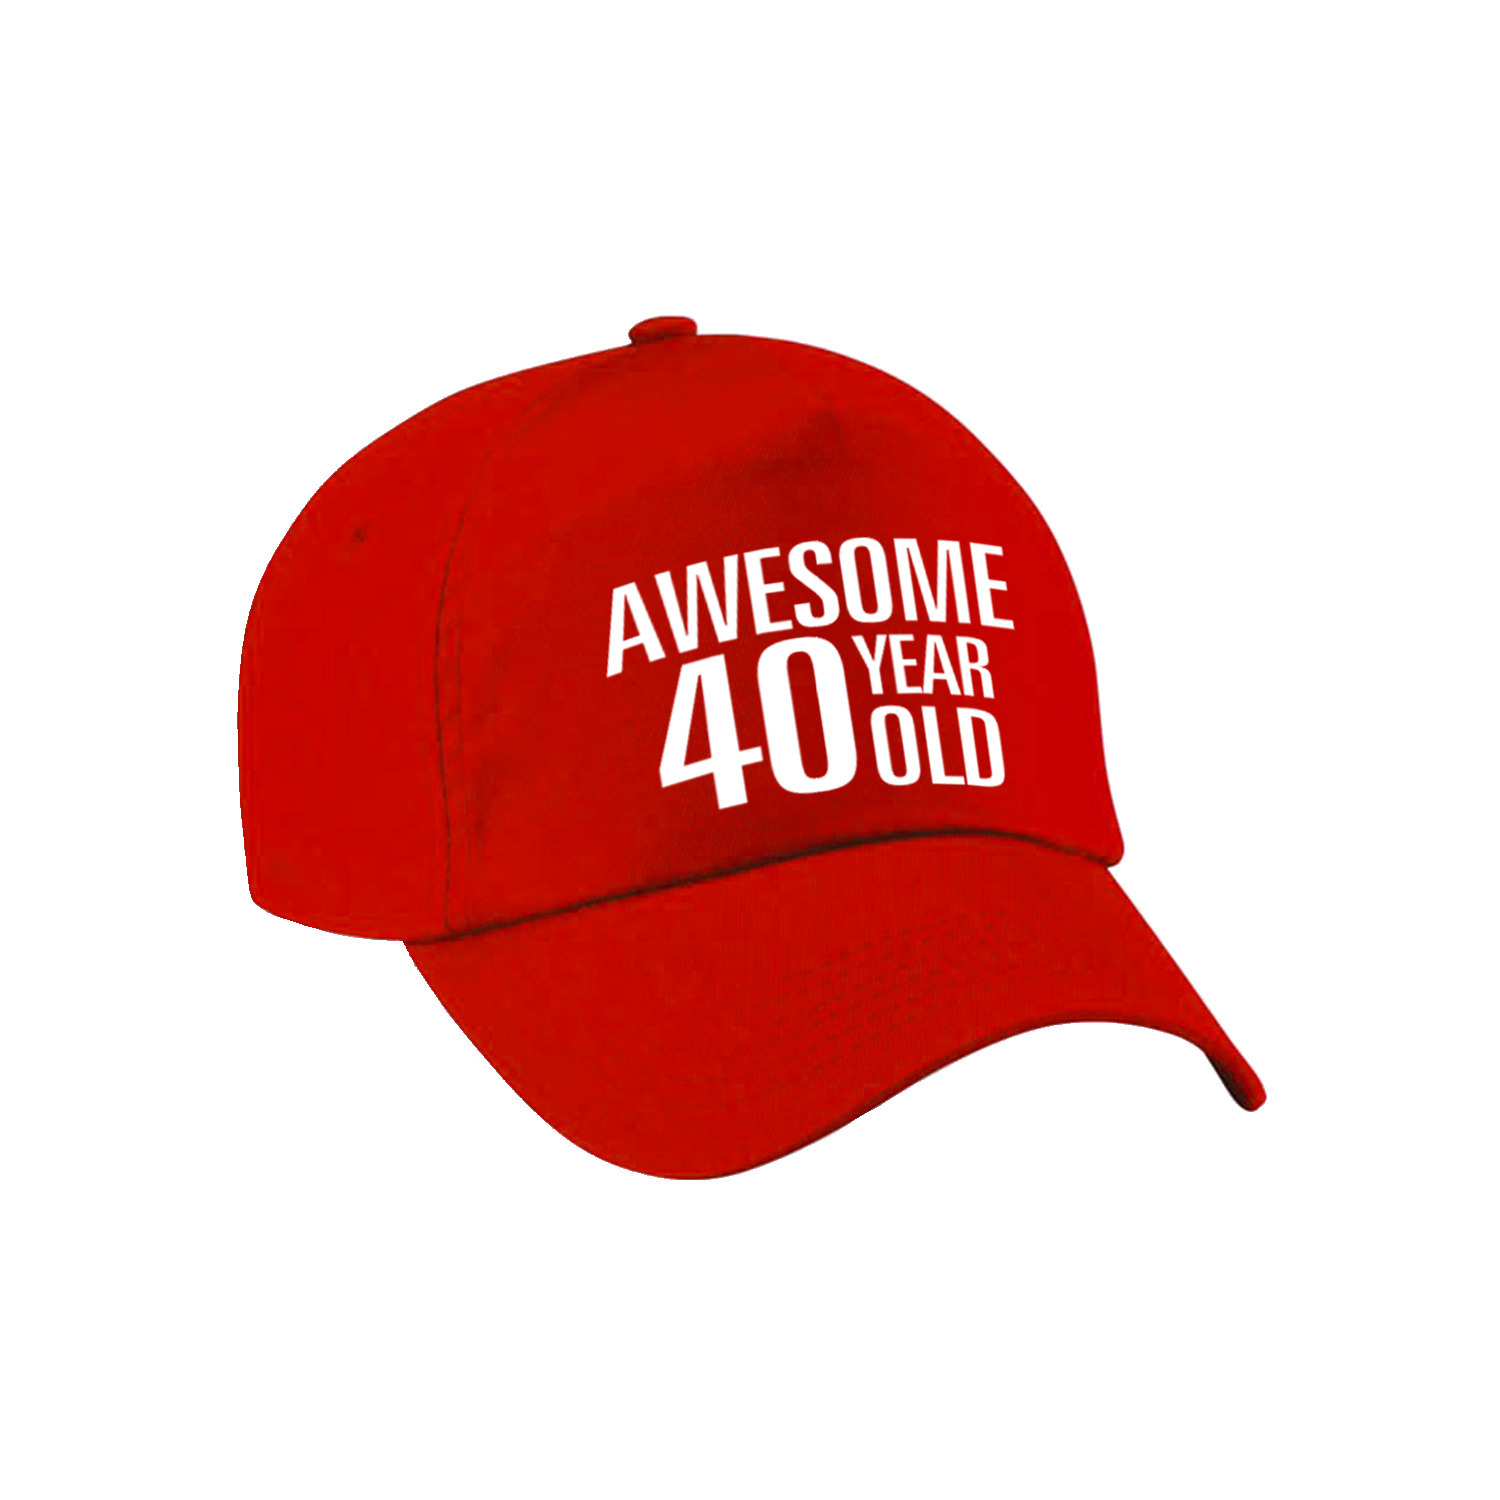 Awesome 40 year old verjaardag pet / cap rood voor dames en heren